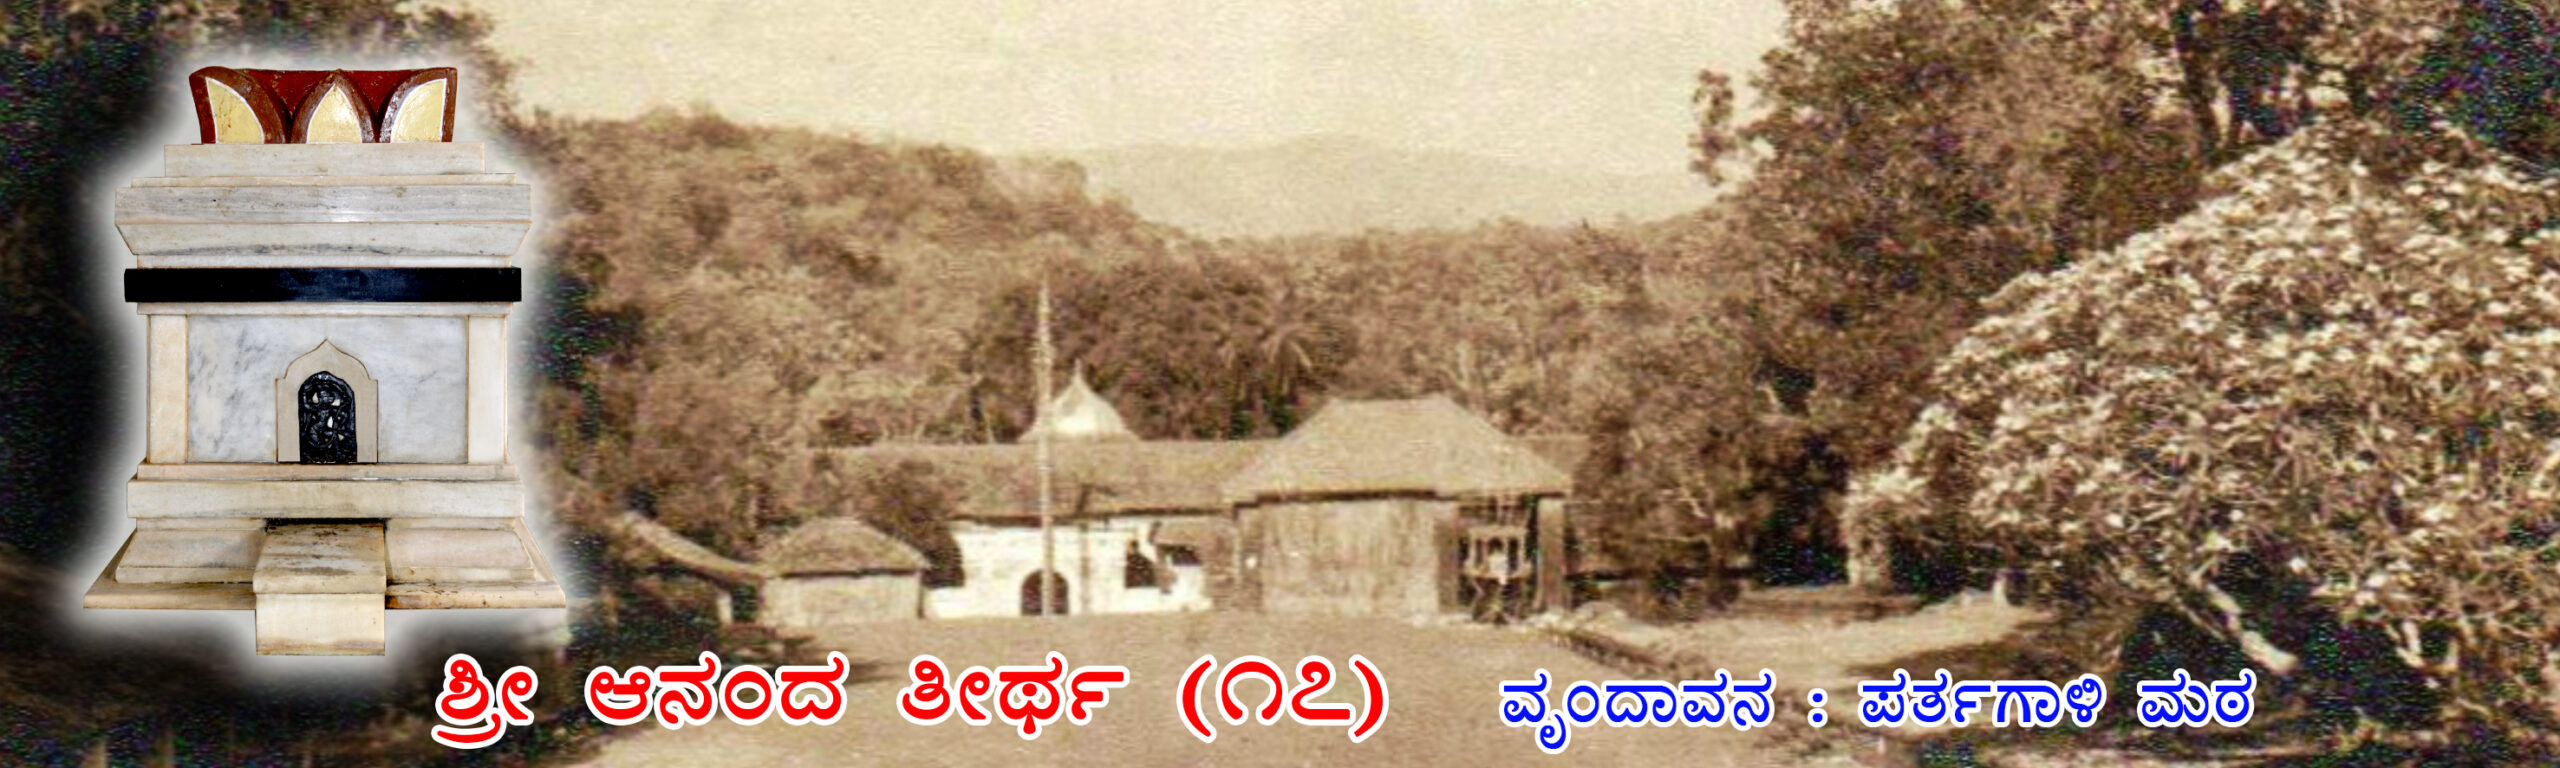 17 Anand Kannada